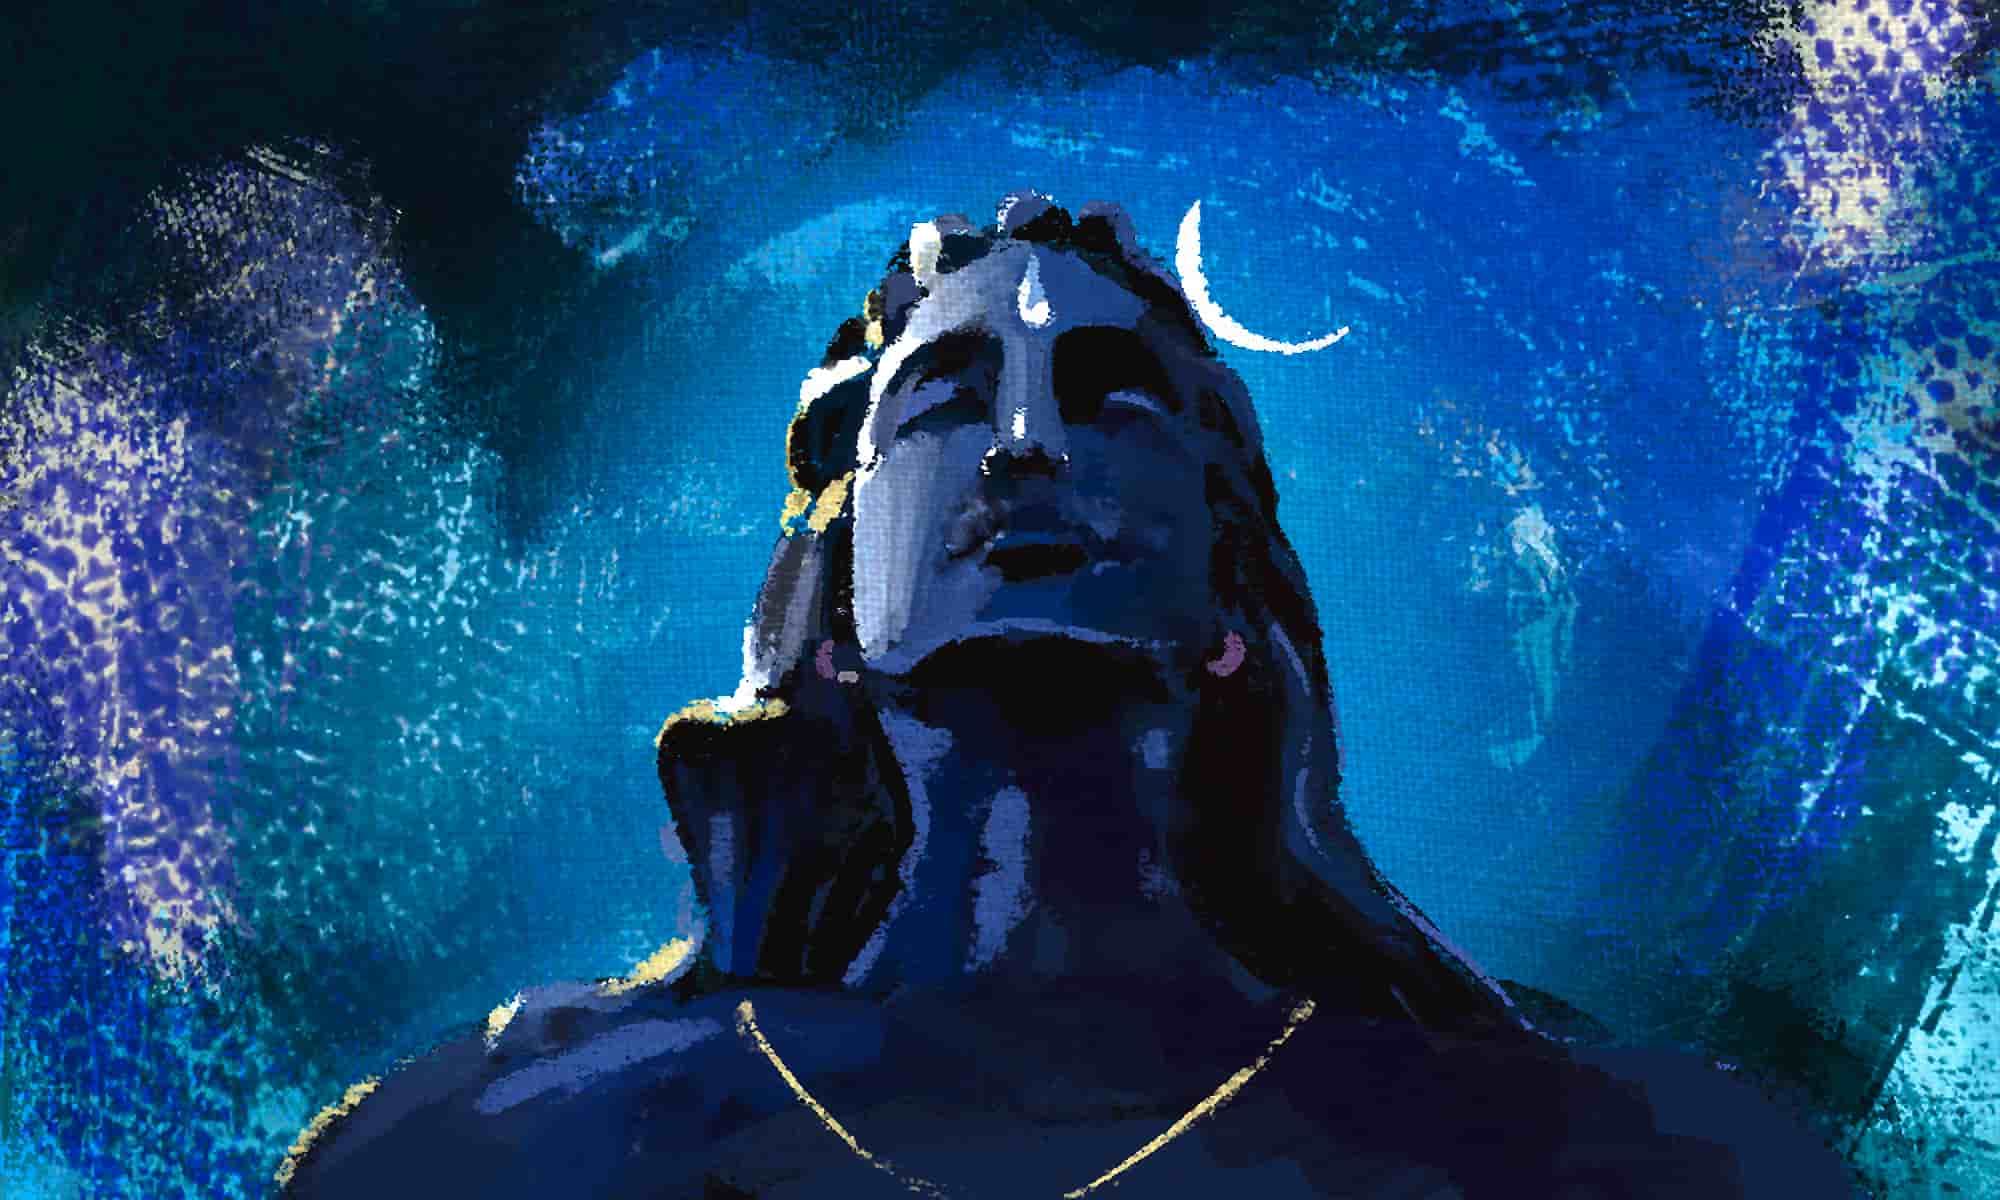 Picture of Adiyogi statue. Shiva is also known as mahadeva